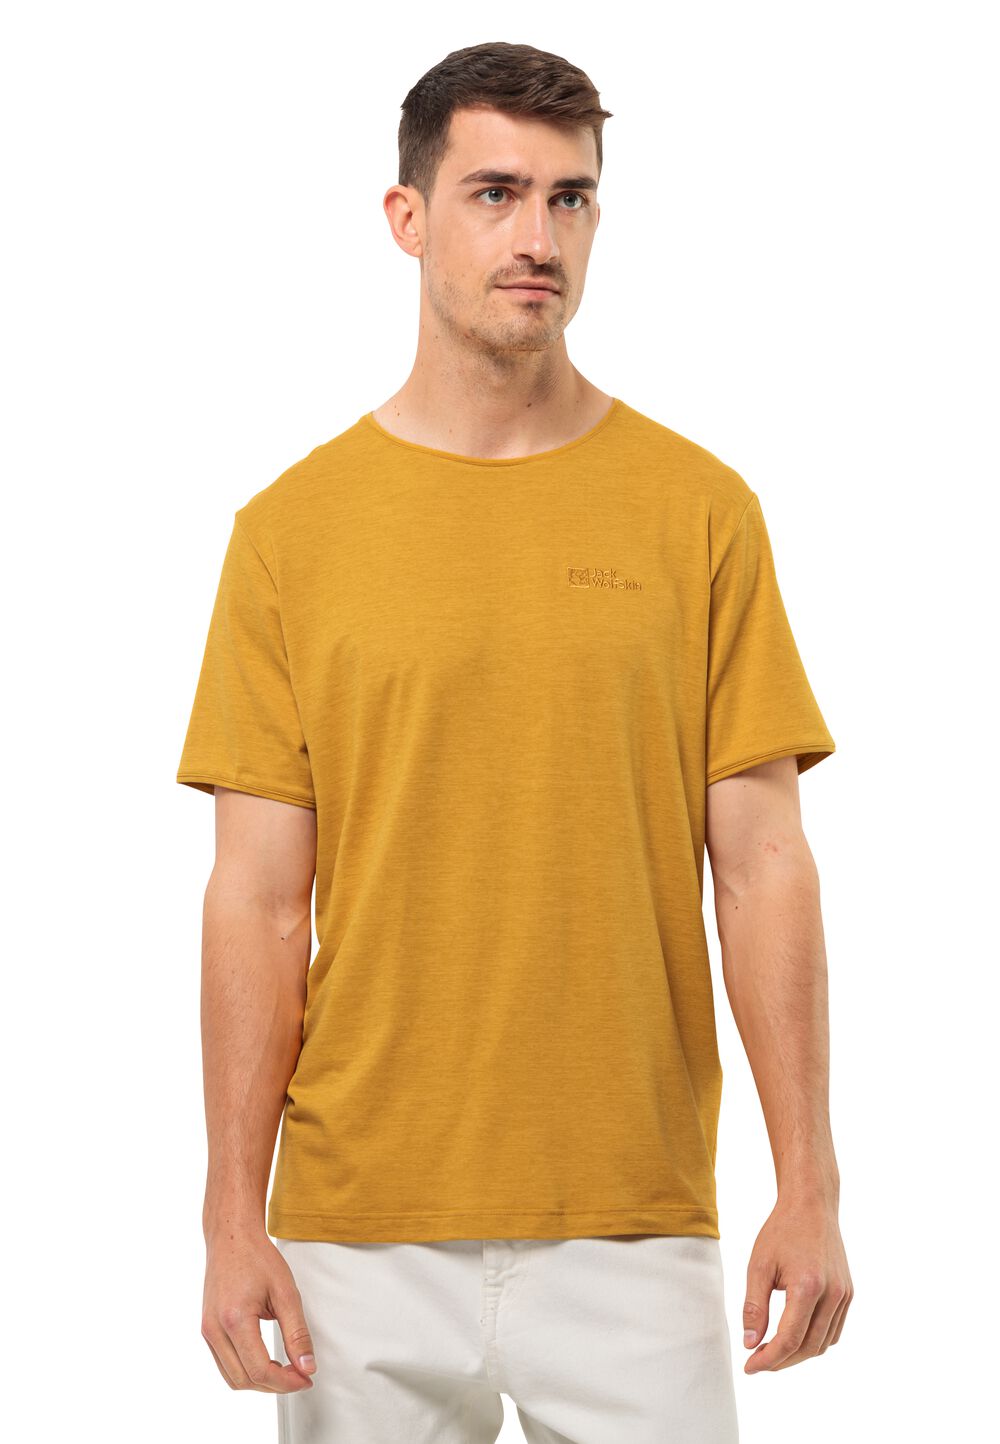 Jack Wolfskin Travel T-Shirt Men Functioneel shirt Heren M bruin curry